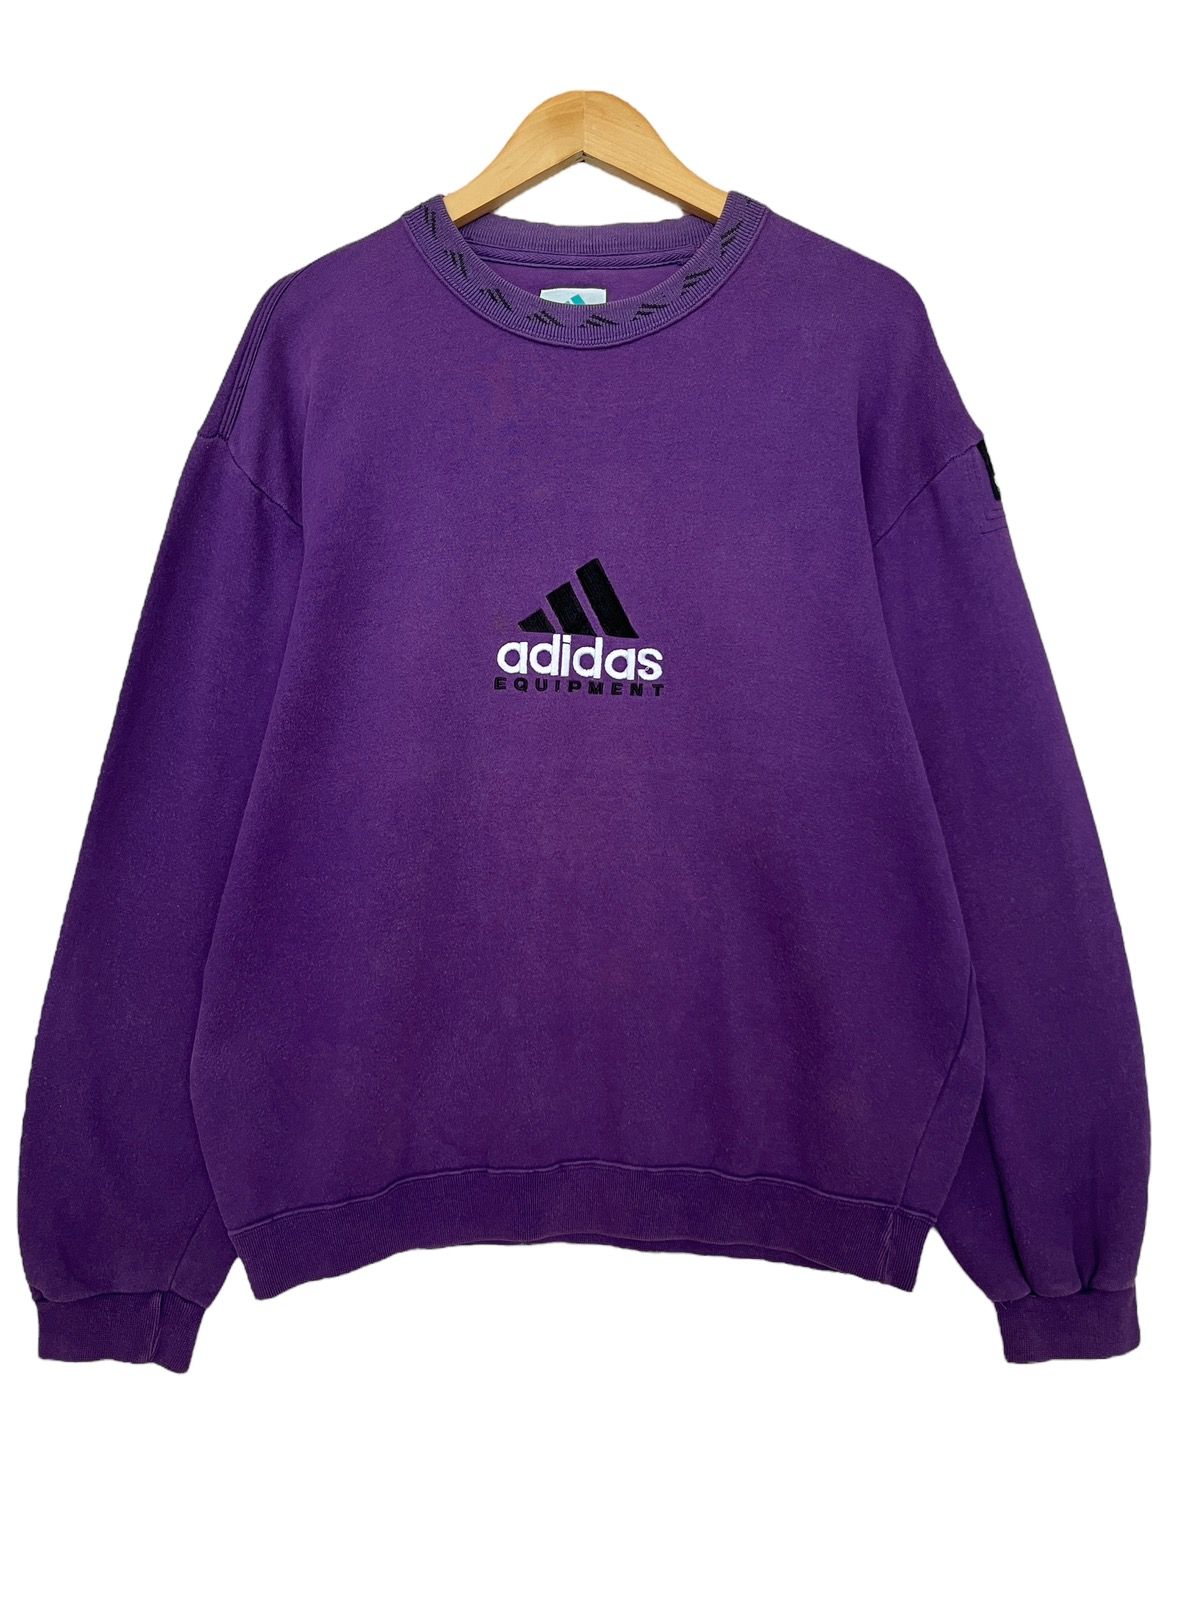 RARE‼️Vintage 90s Adidas Equipment Sweatshirt Sweatshirt - 1